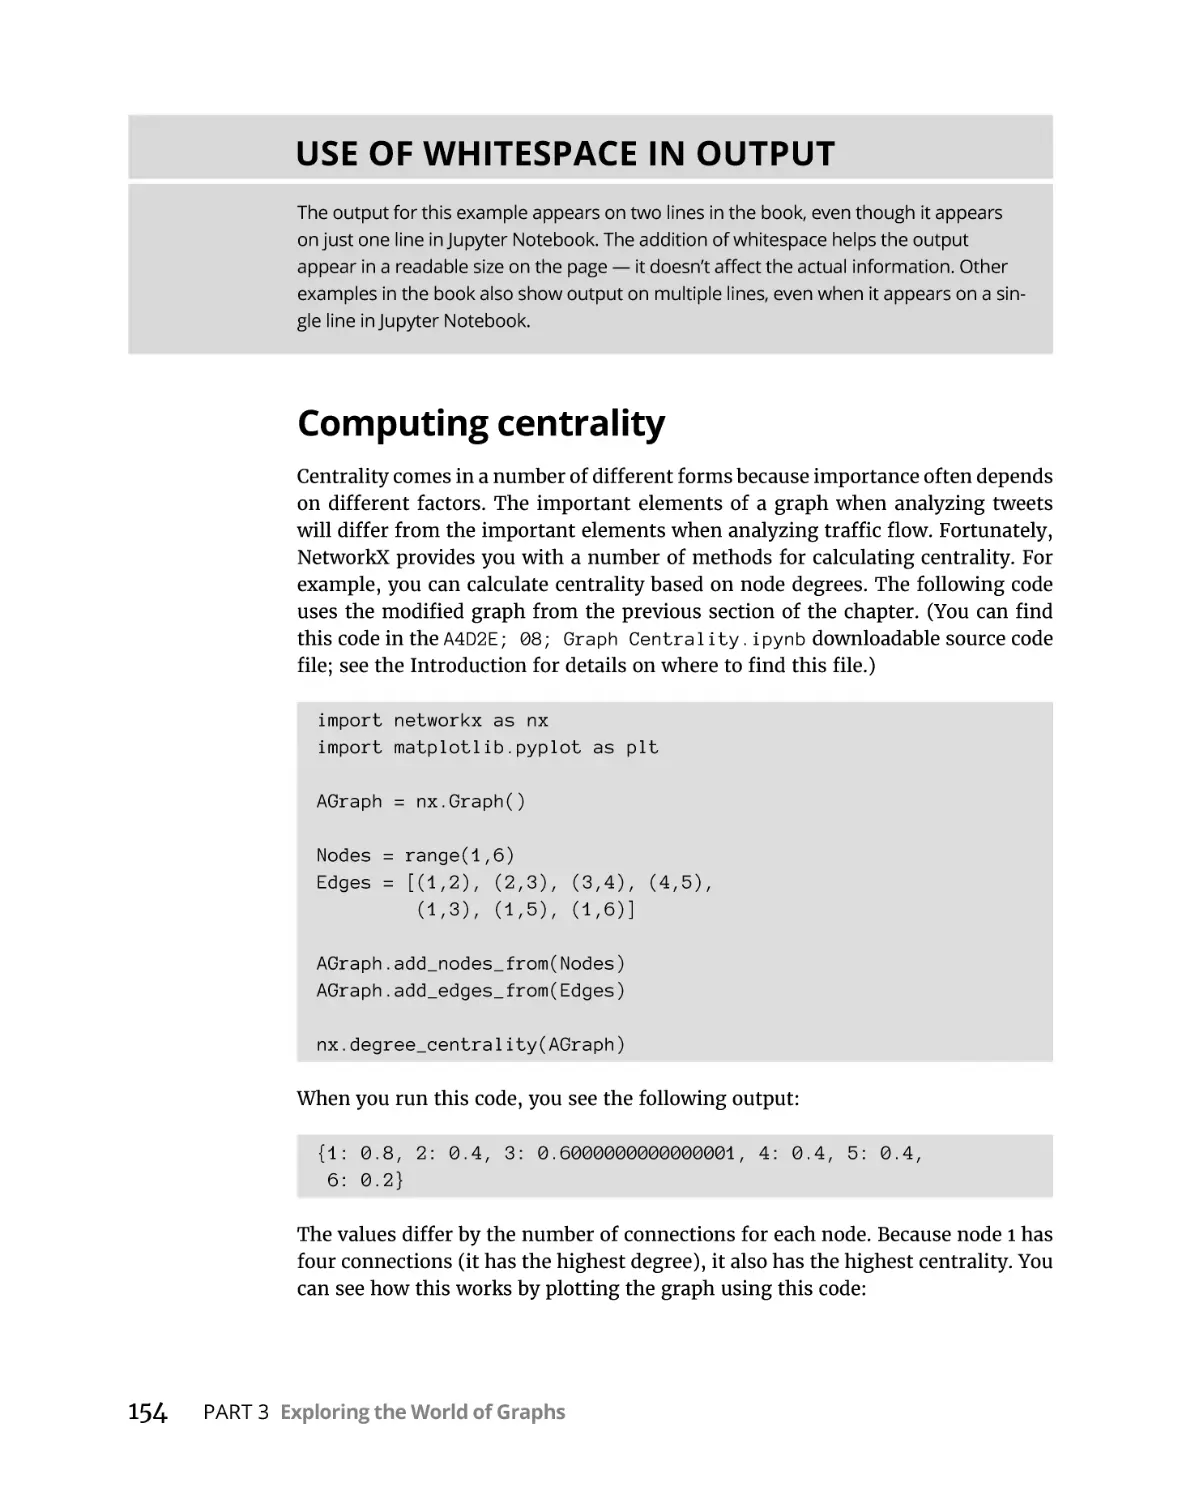 Computing centrality